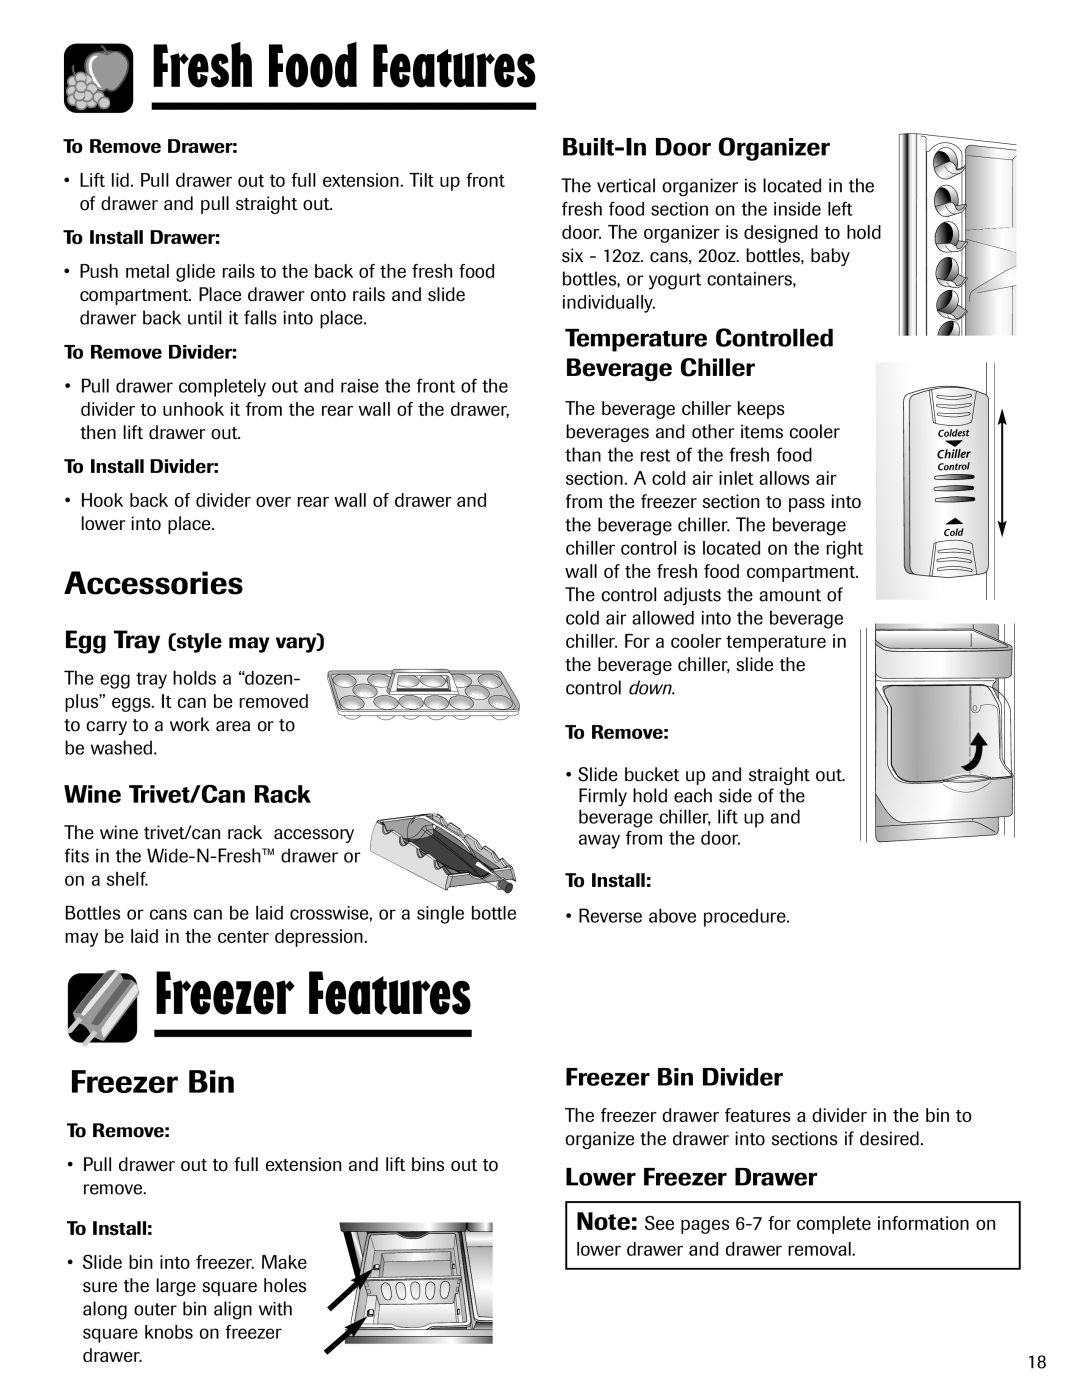 Maytag MFI2266AEW Accessories, Freezer Bin, Door, Wine Trivet/Can Rack, Temperature Controlled Beverage Chiller, Built 